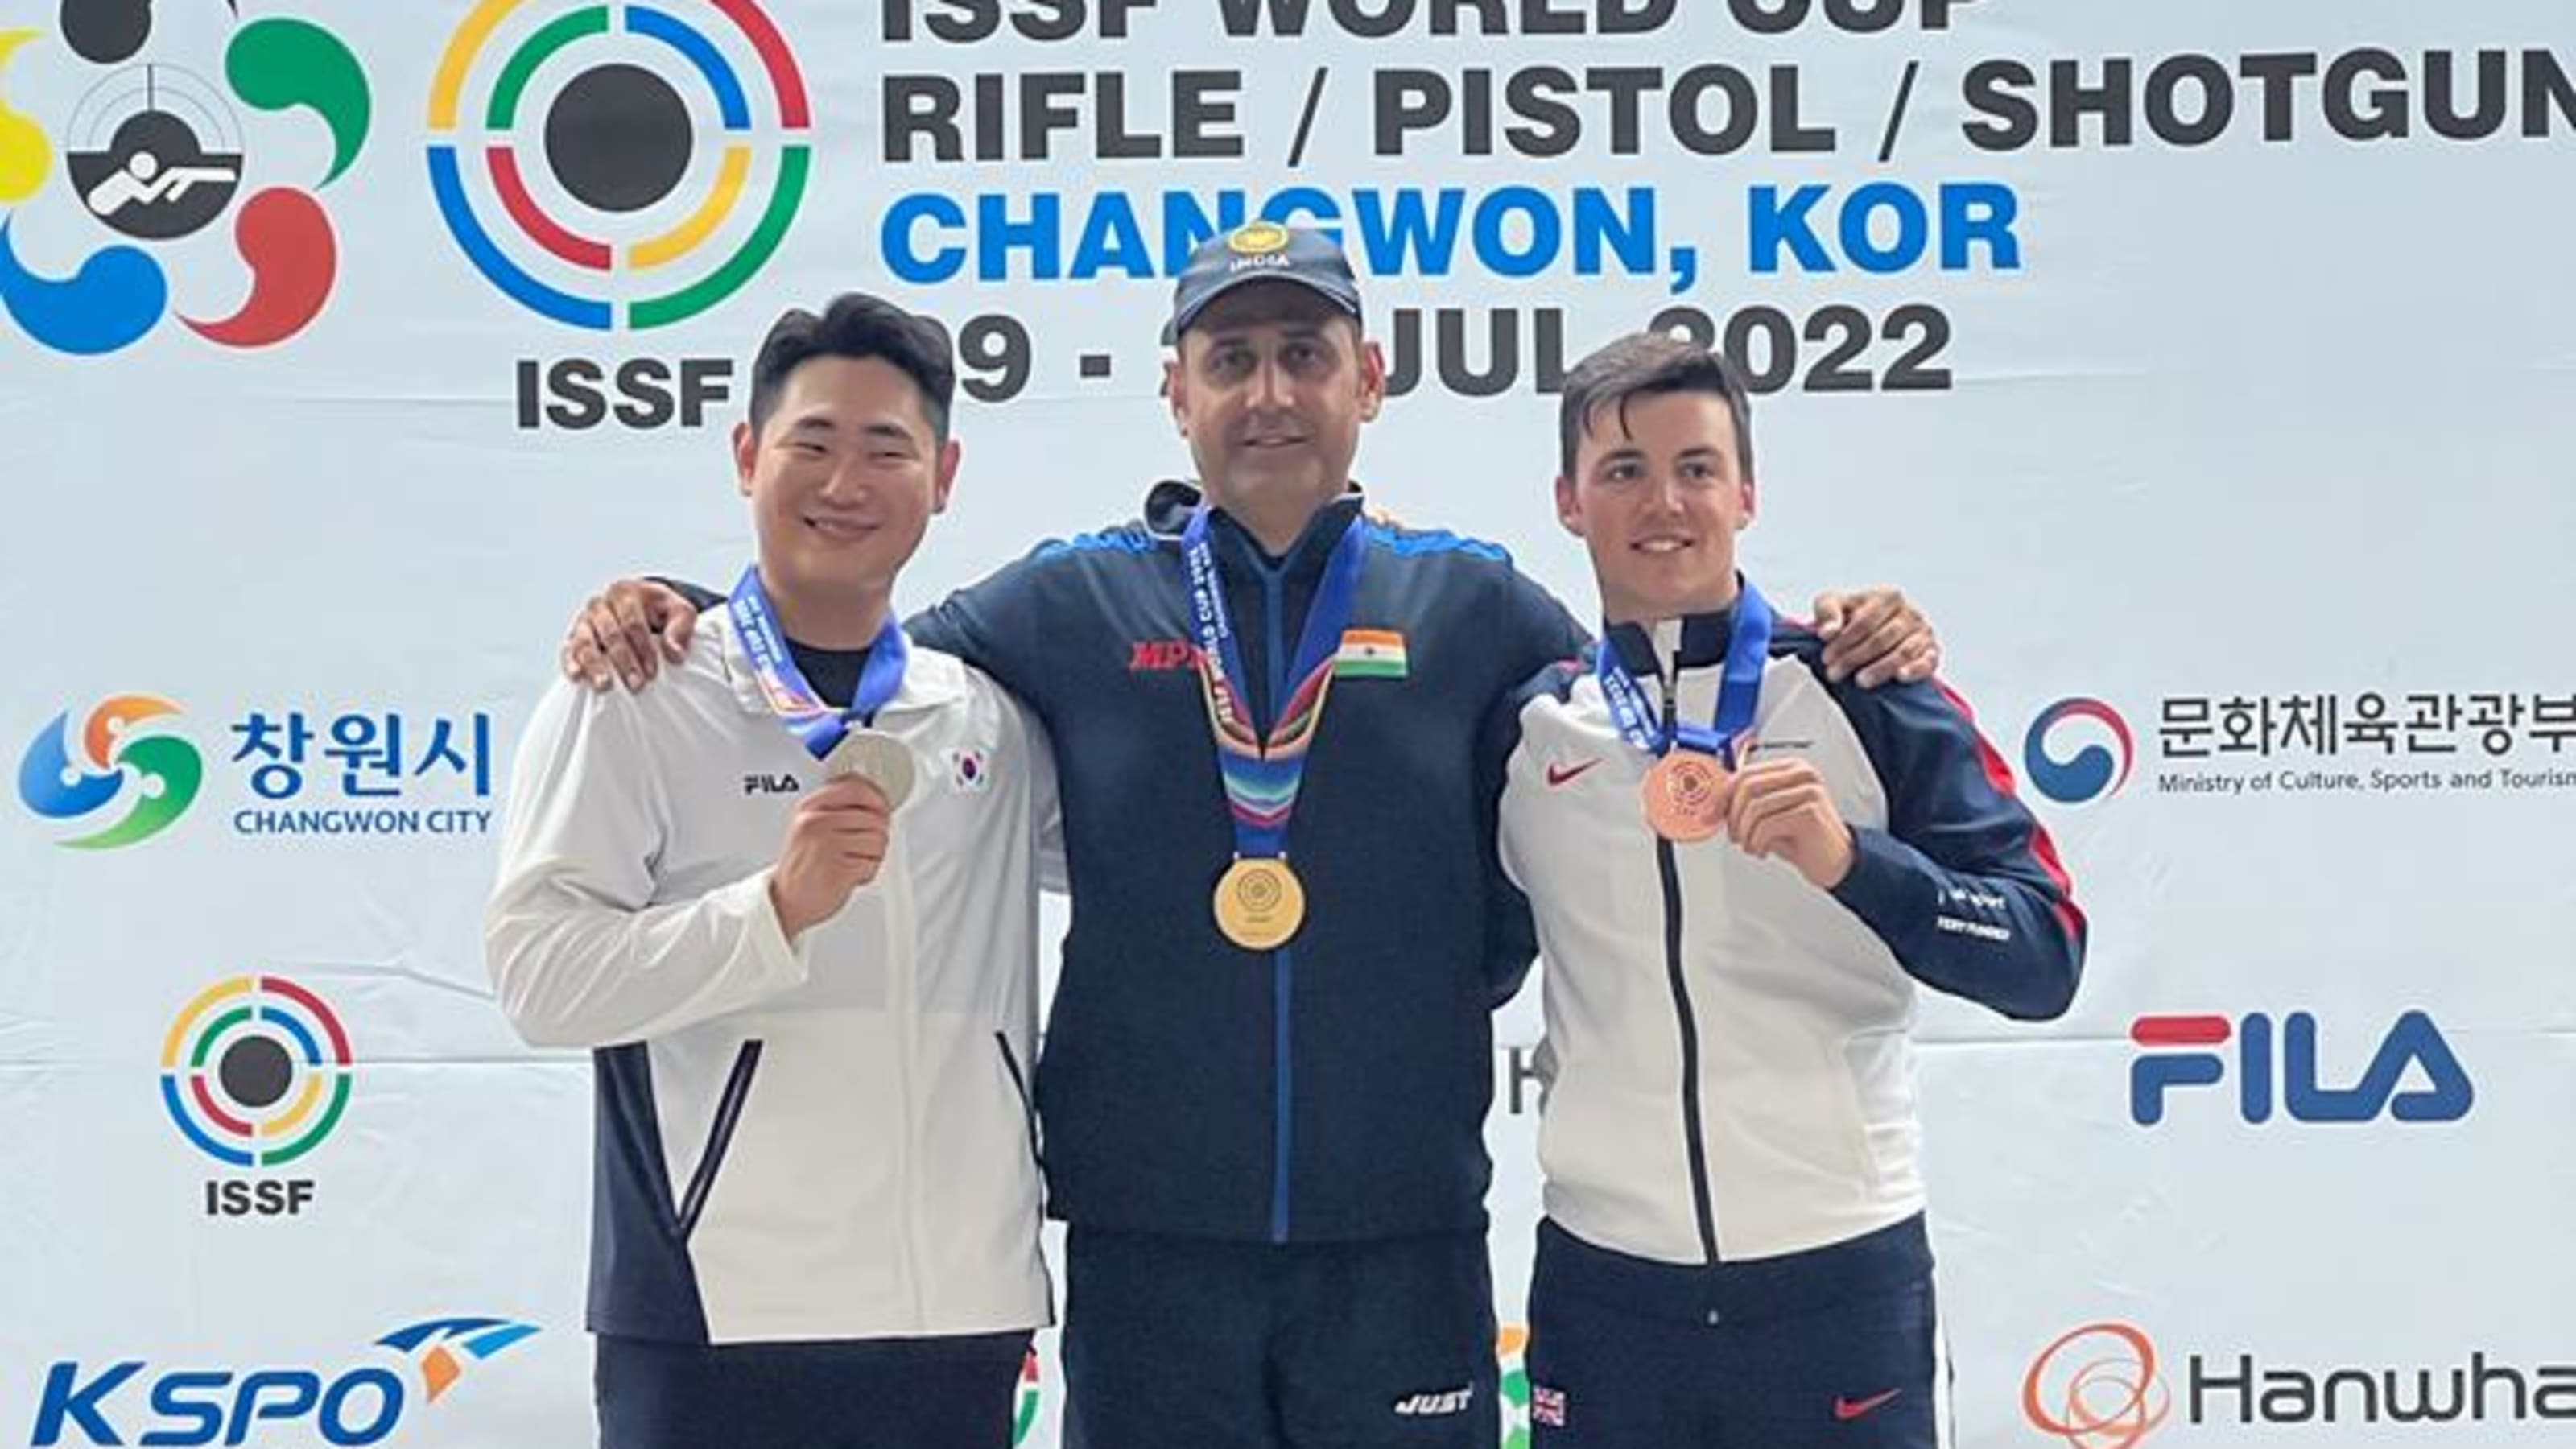 Mairaj Ahmed Khan won gold Medal at ISSF World Cup